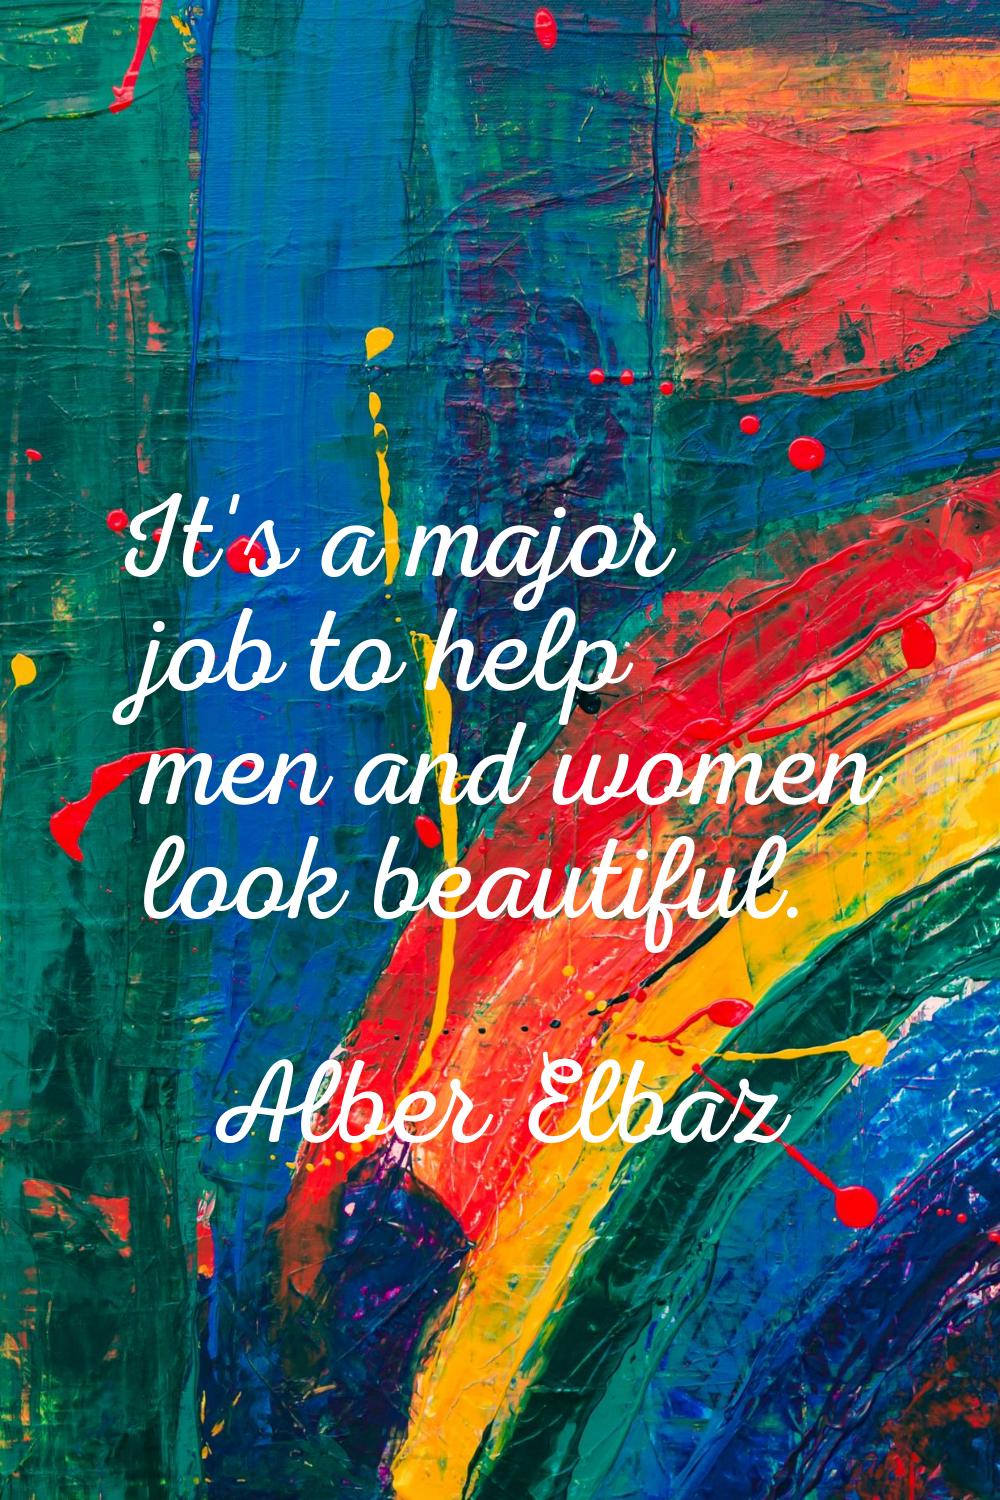 It's a major job to help men and women look beautiful.